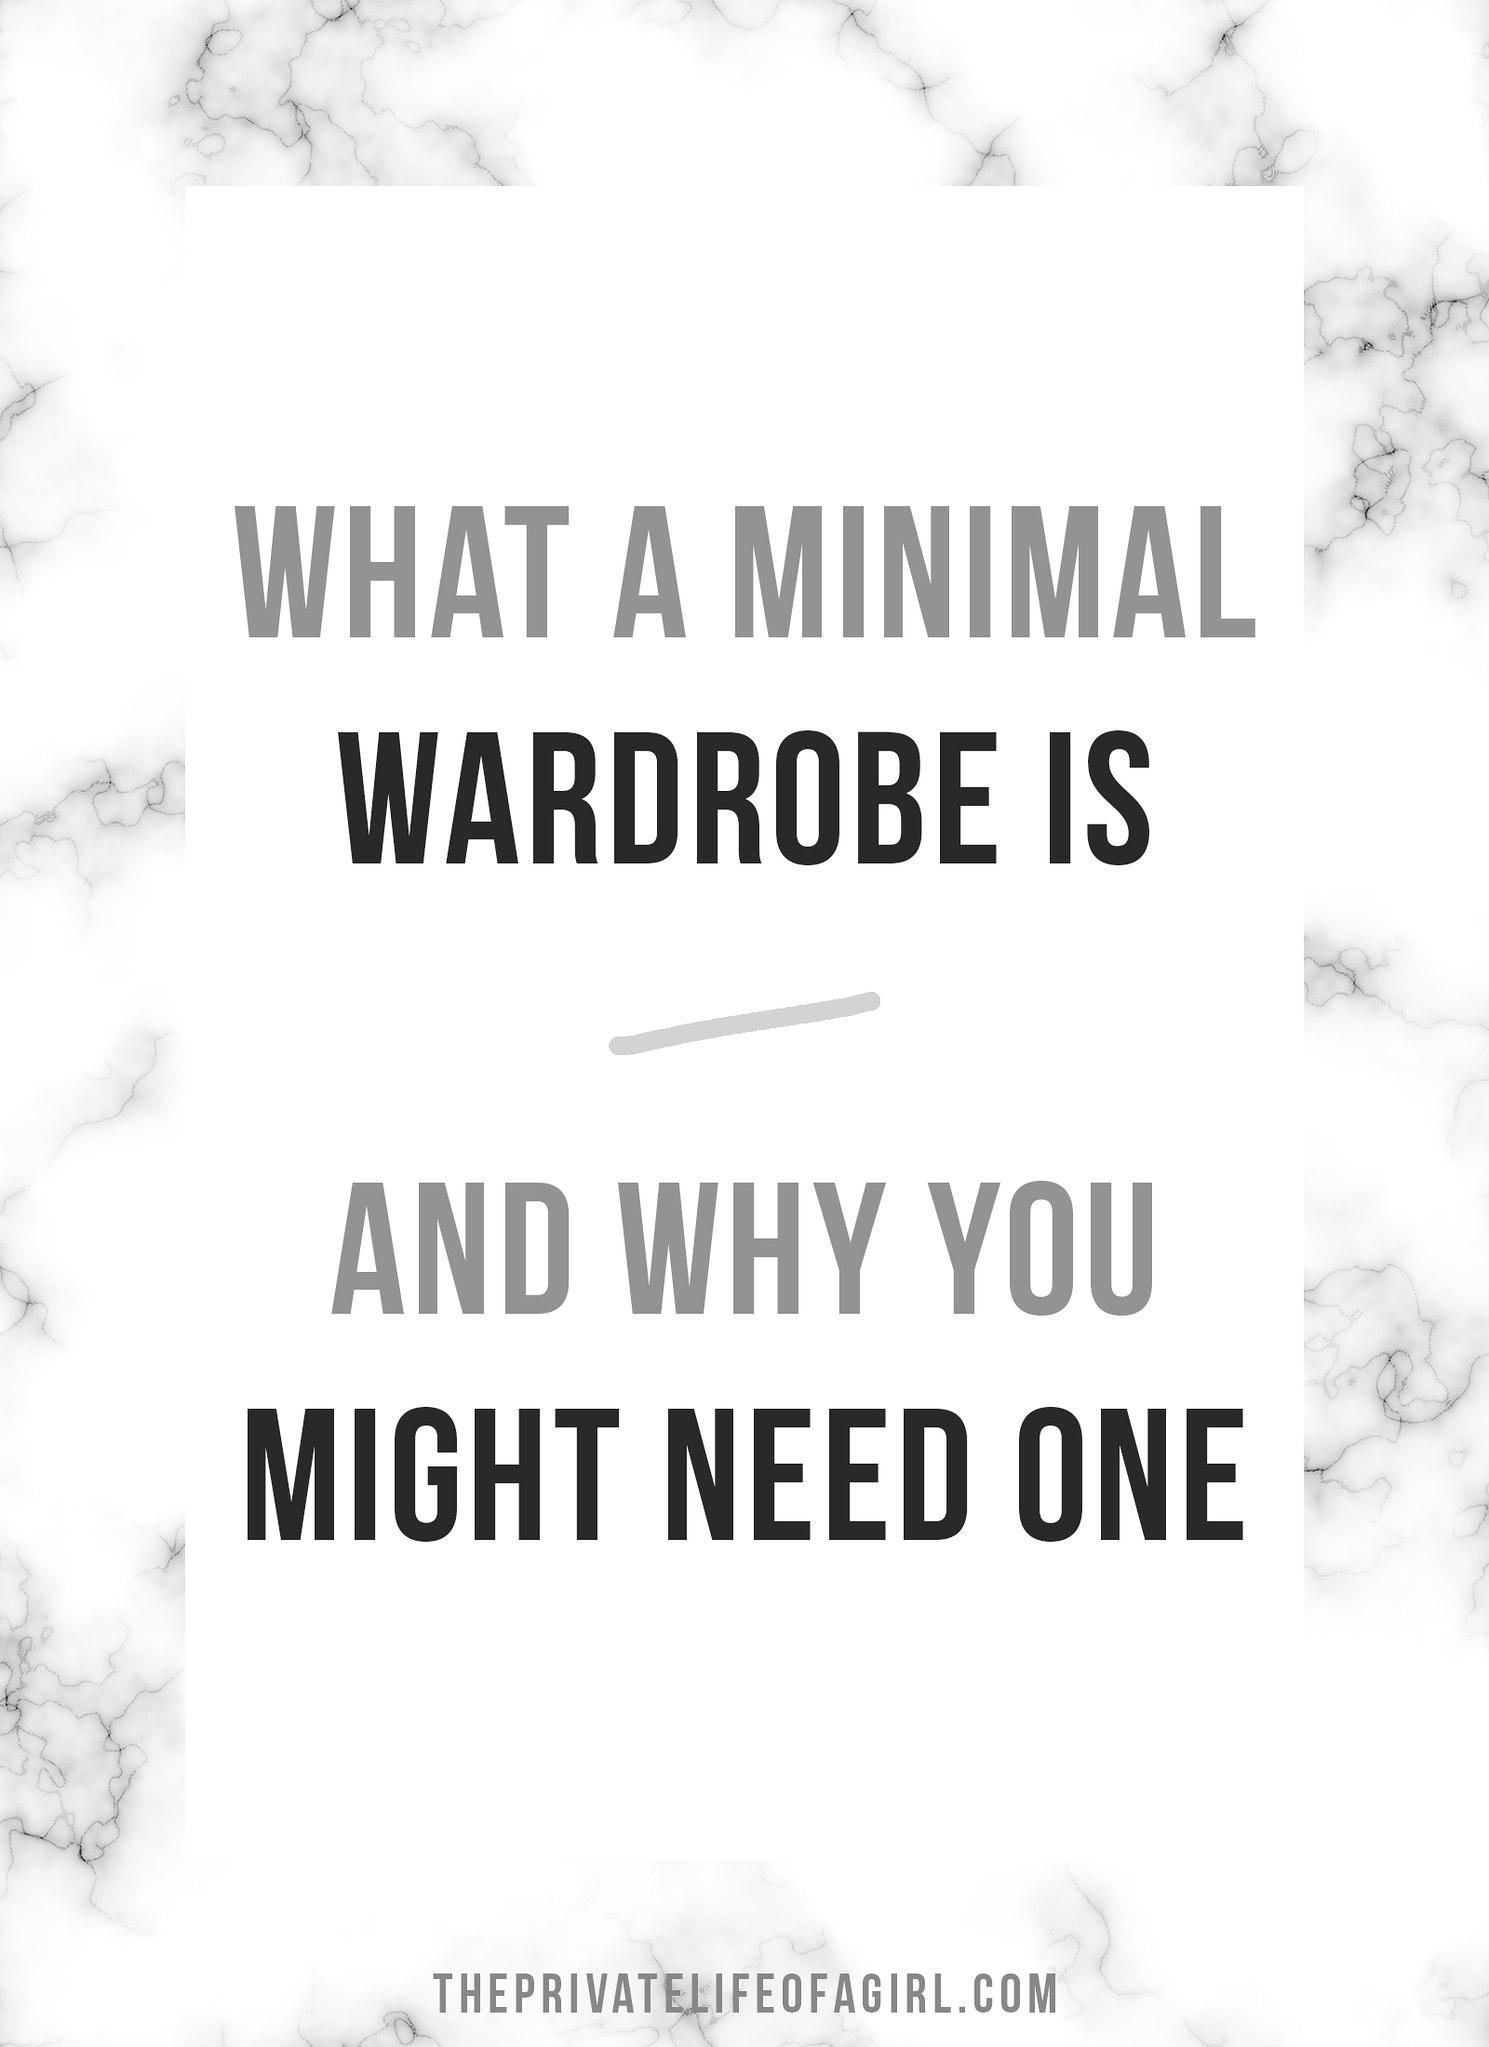 What Is A Minimal Wardrobe?